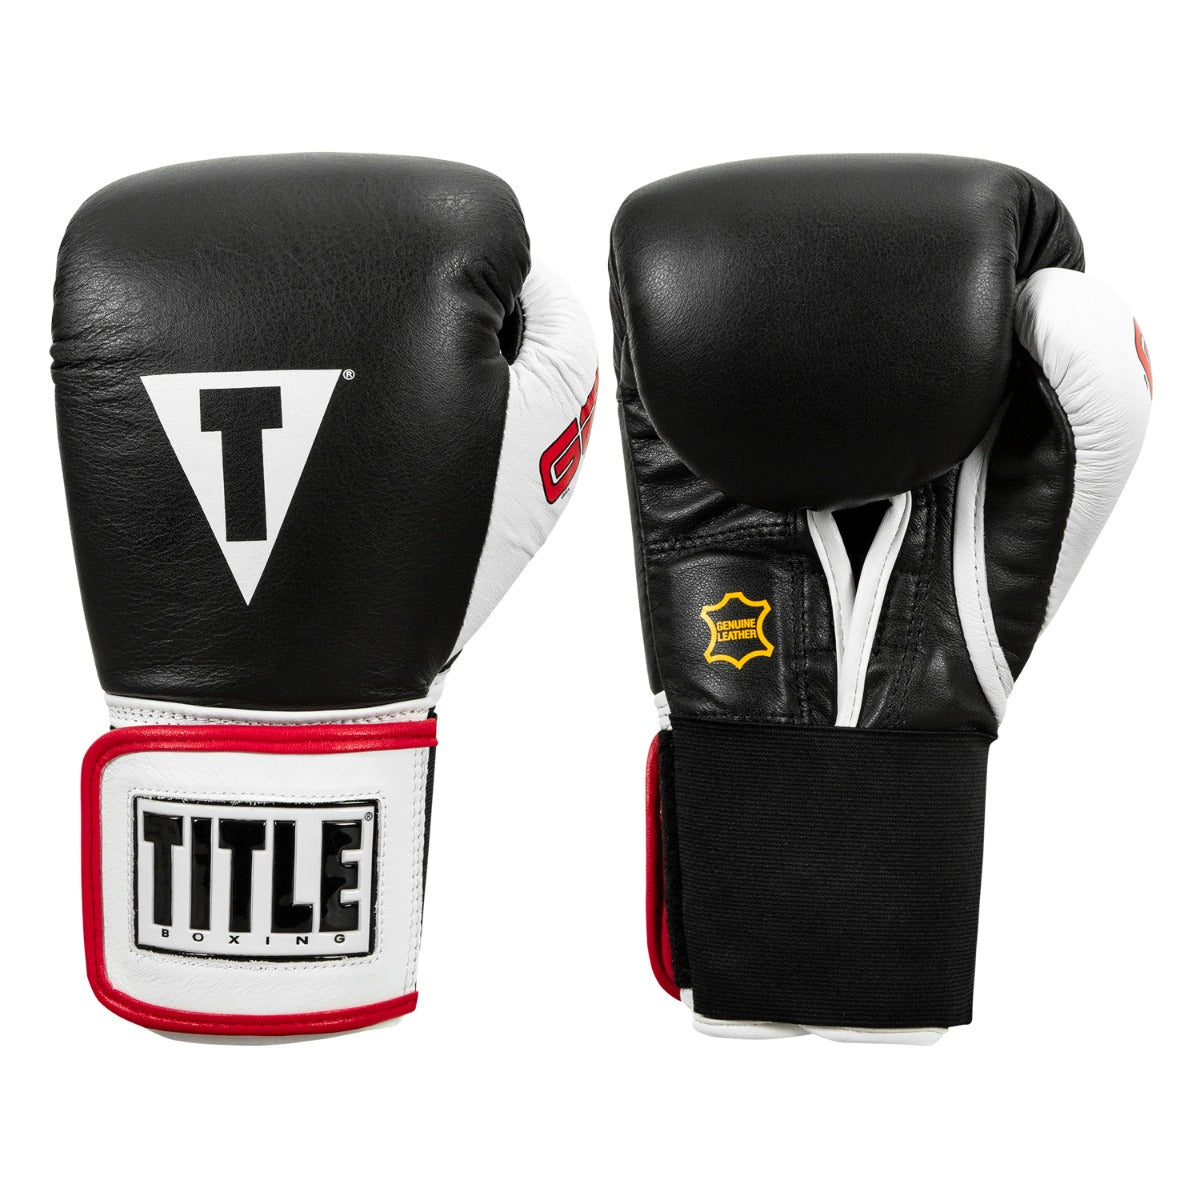 TITLE GEL World Elastic Training Gloves